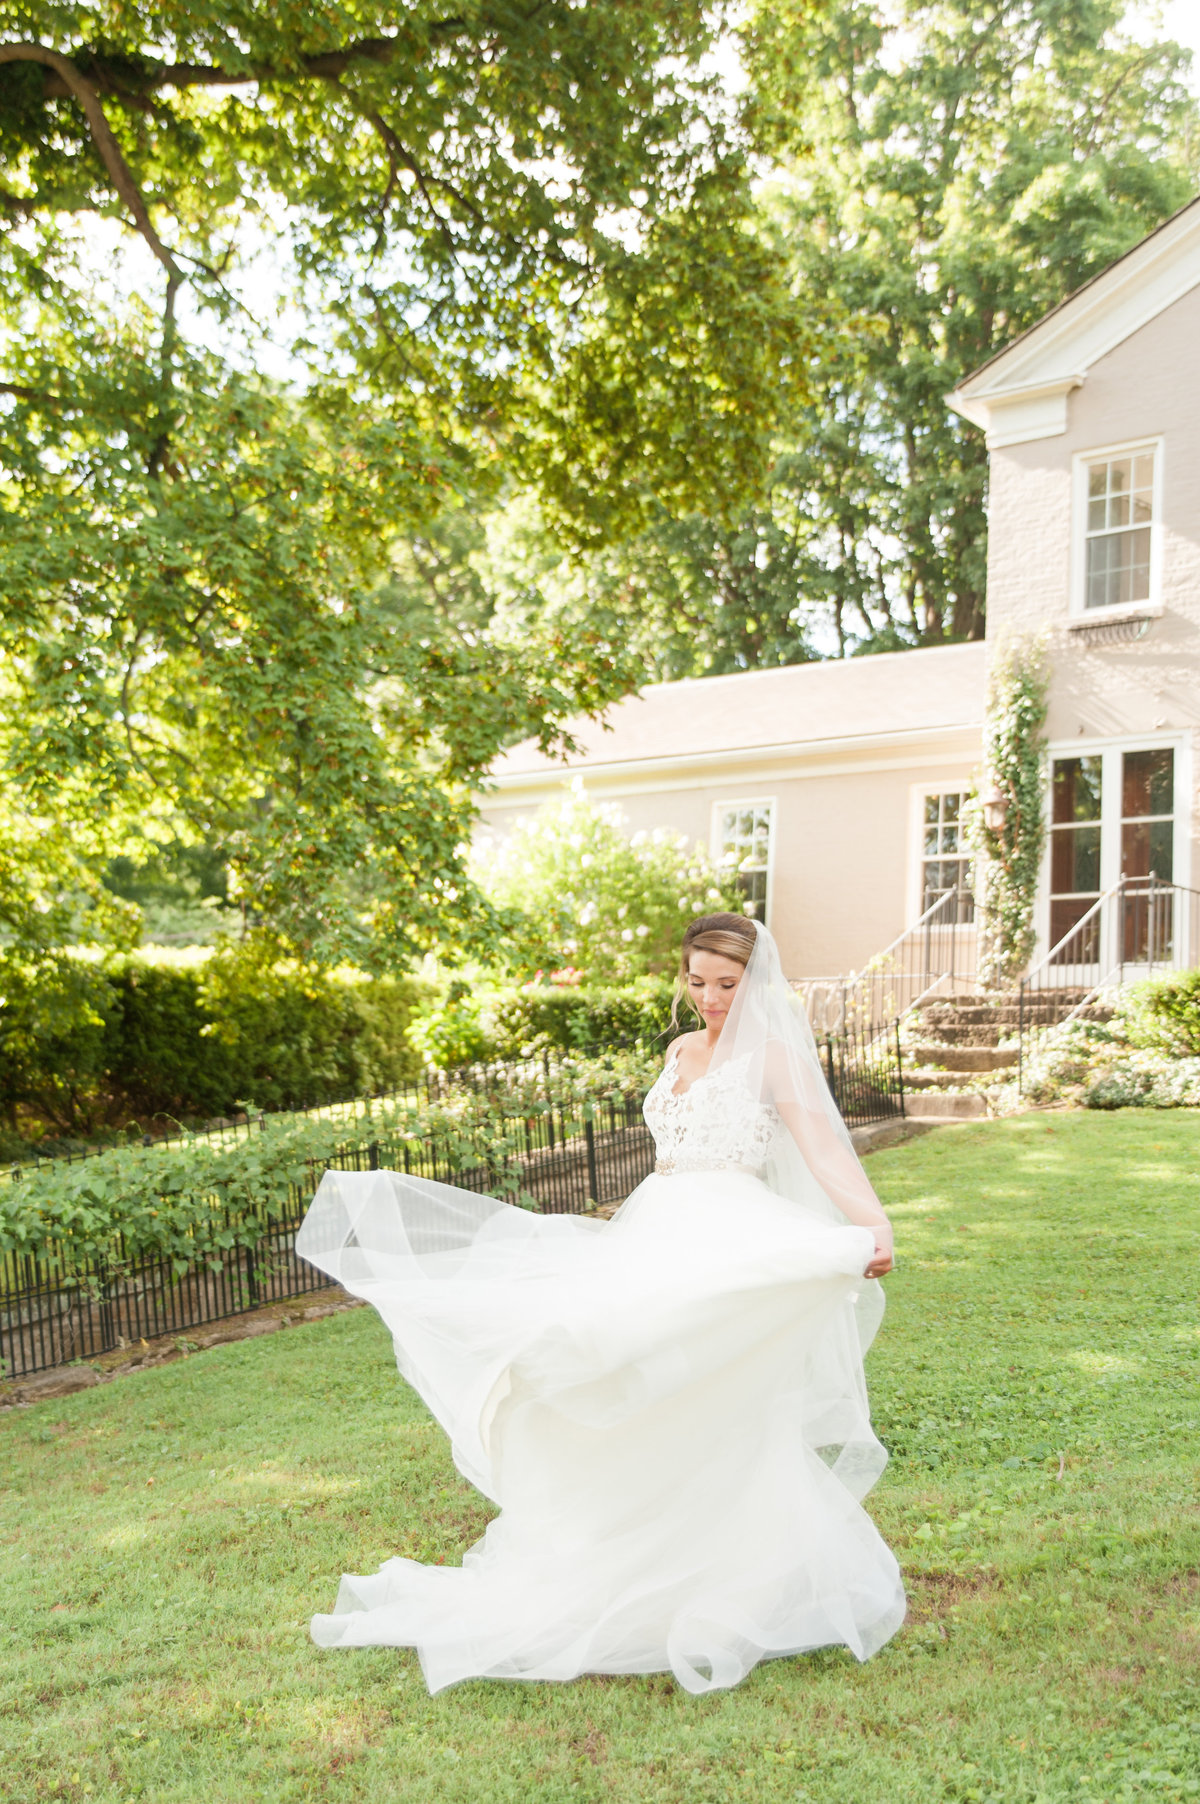 Bride in Dress Spinning